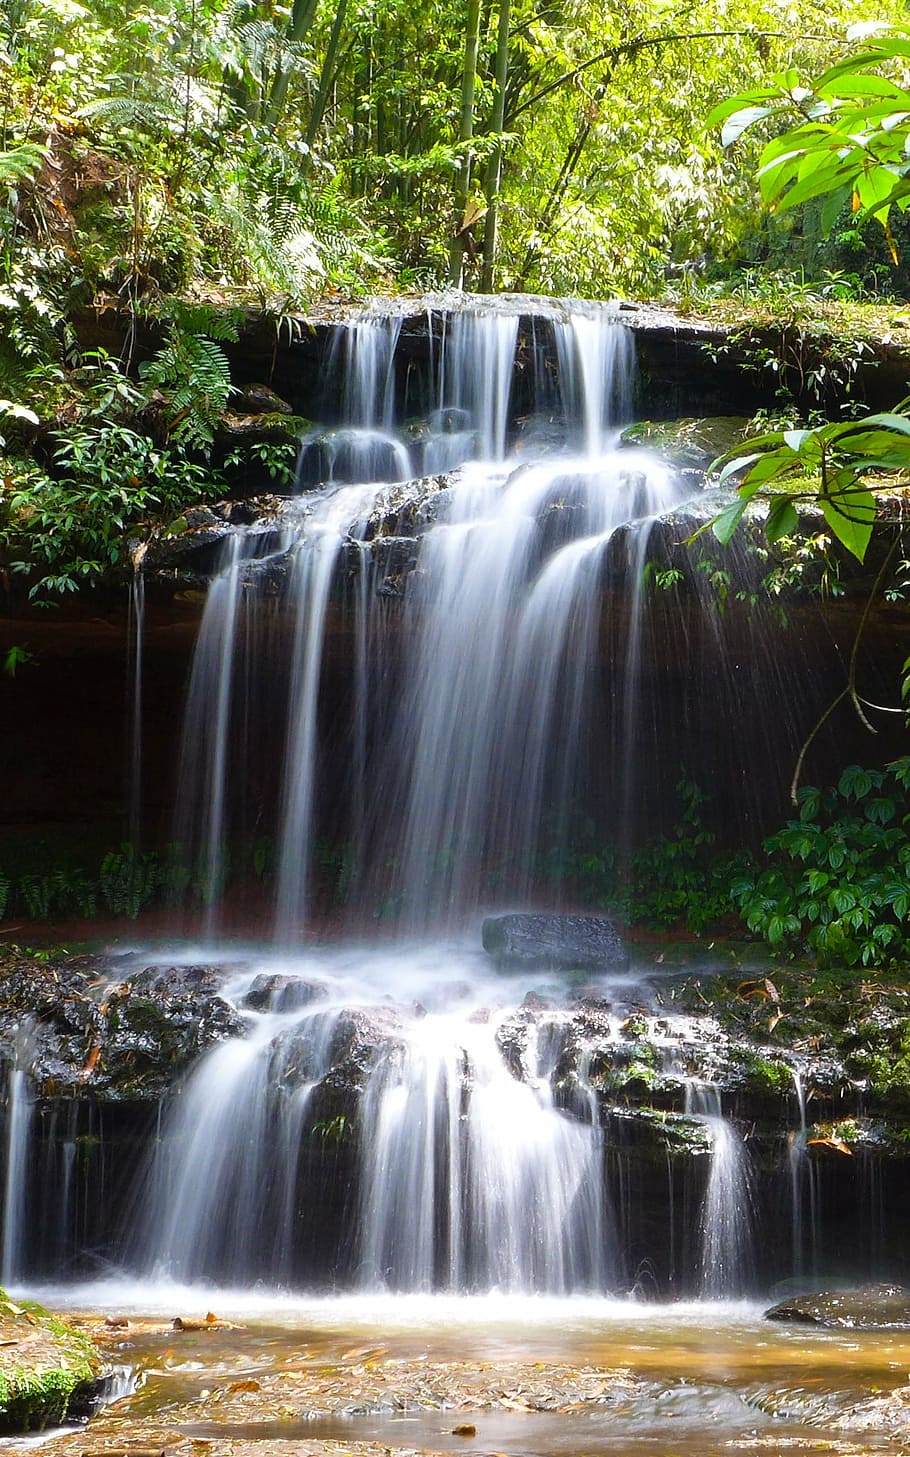 creek, running water, falls, scenics - nature, beauty in nature